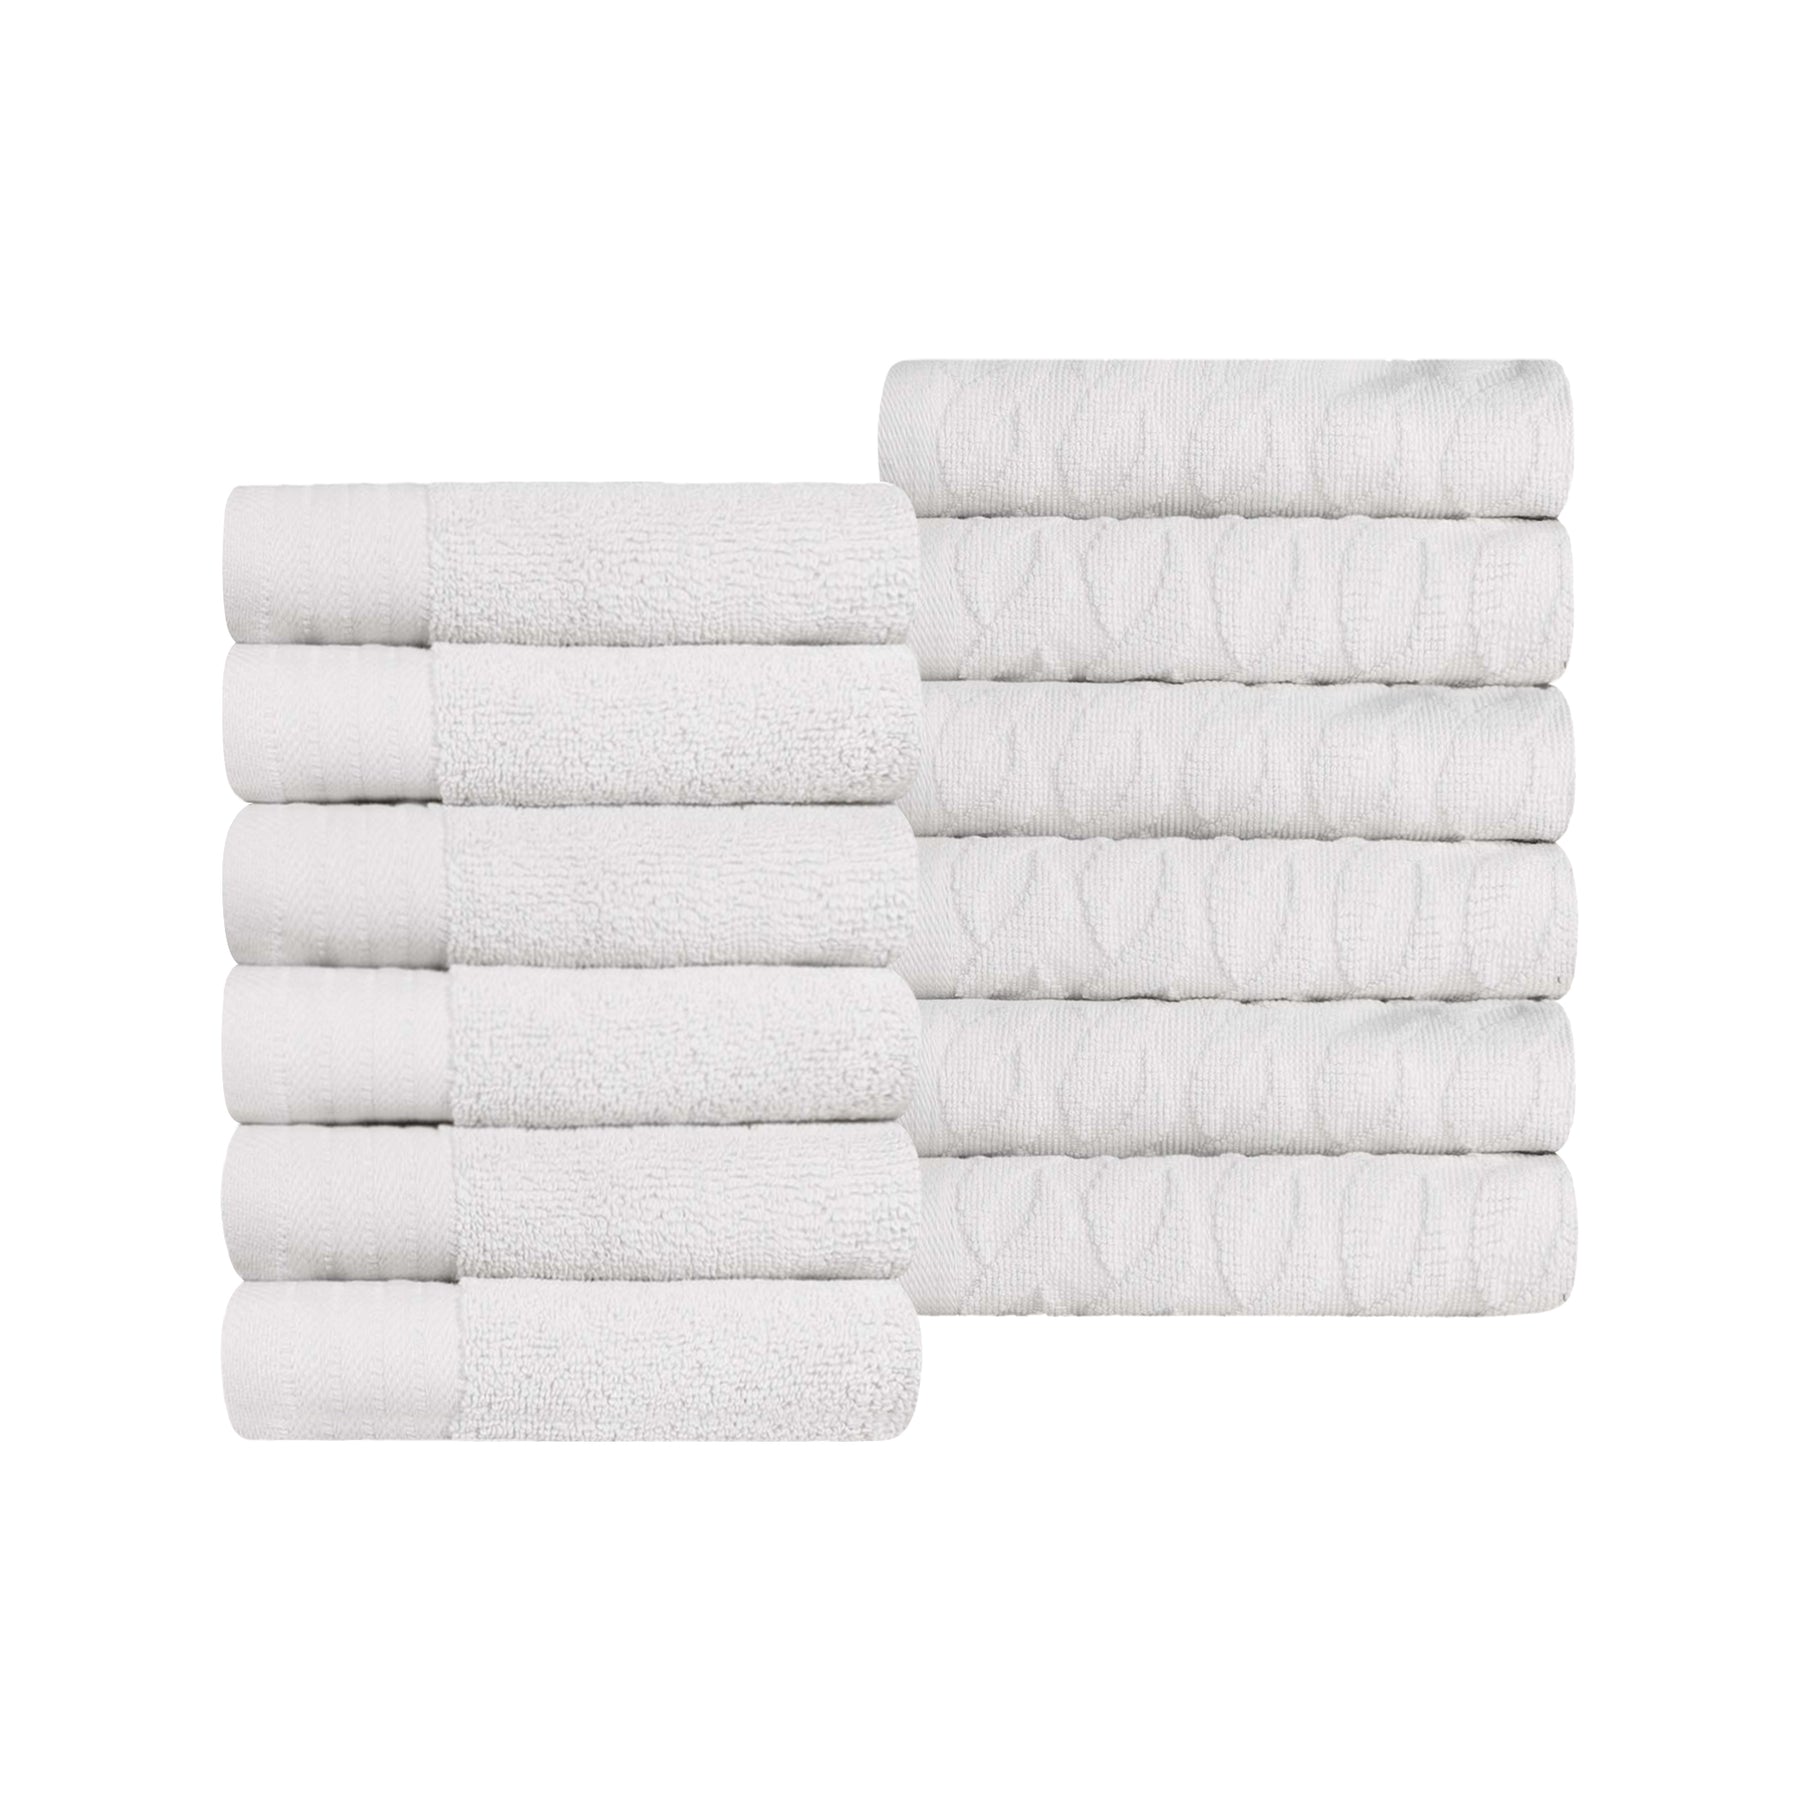 Premium Turkish Cotton Jacquard Herringbone and Solid 12-Piece Face Towel/ Washcloth Set - White